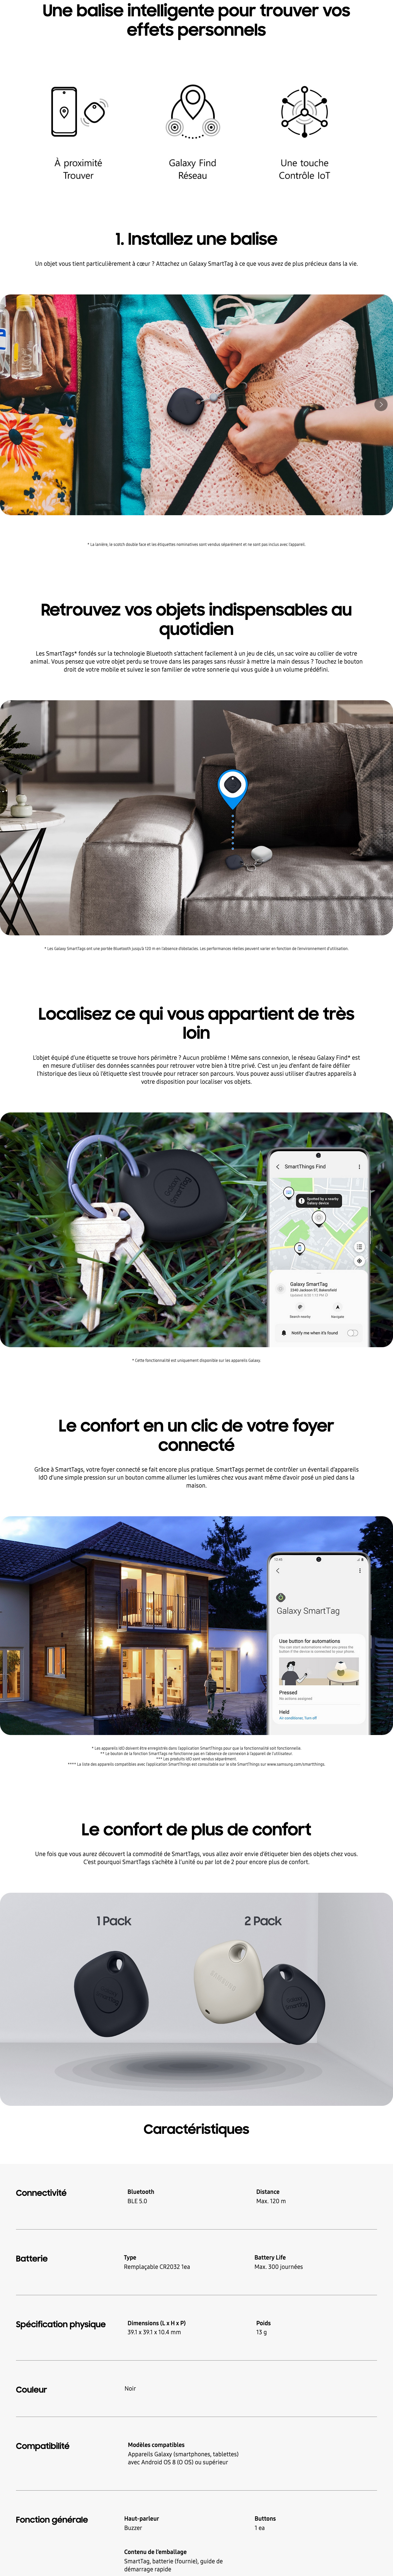 Smart tag samsung : balise intelligente Bluetooth pour retrouver